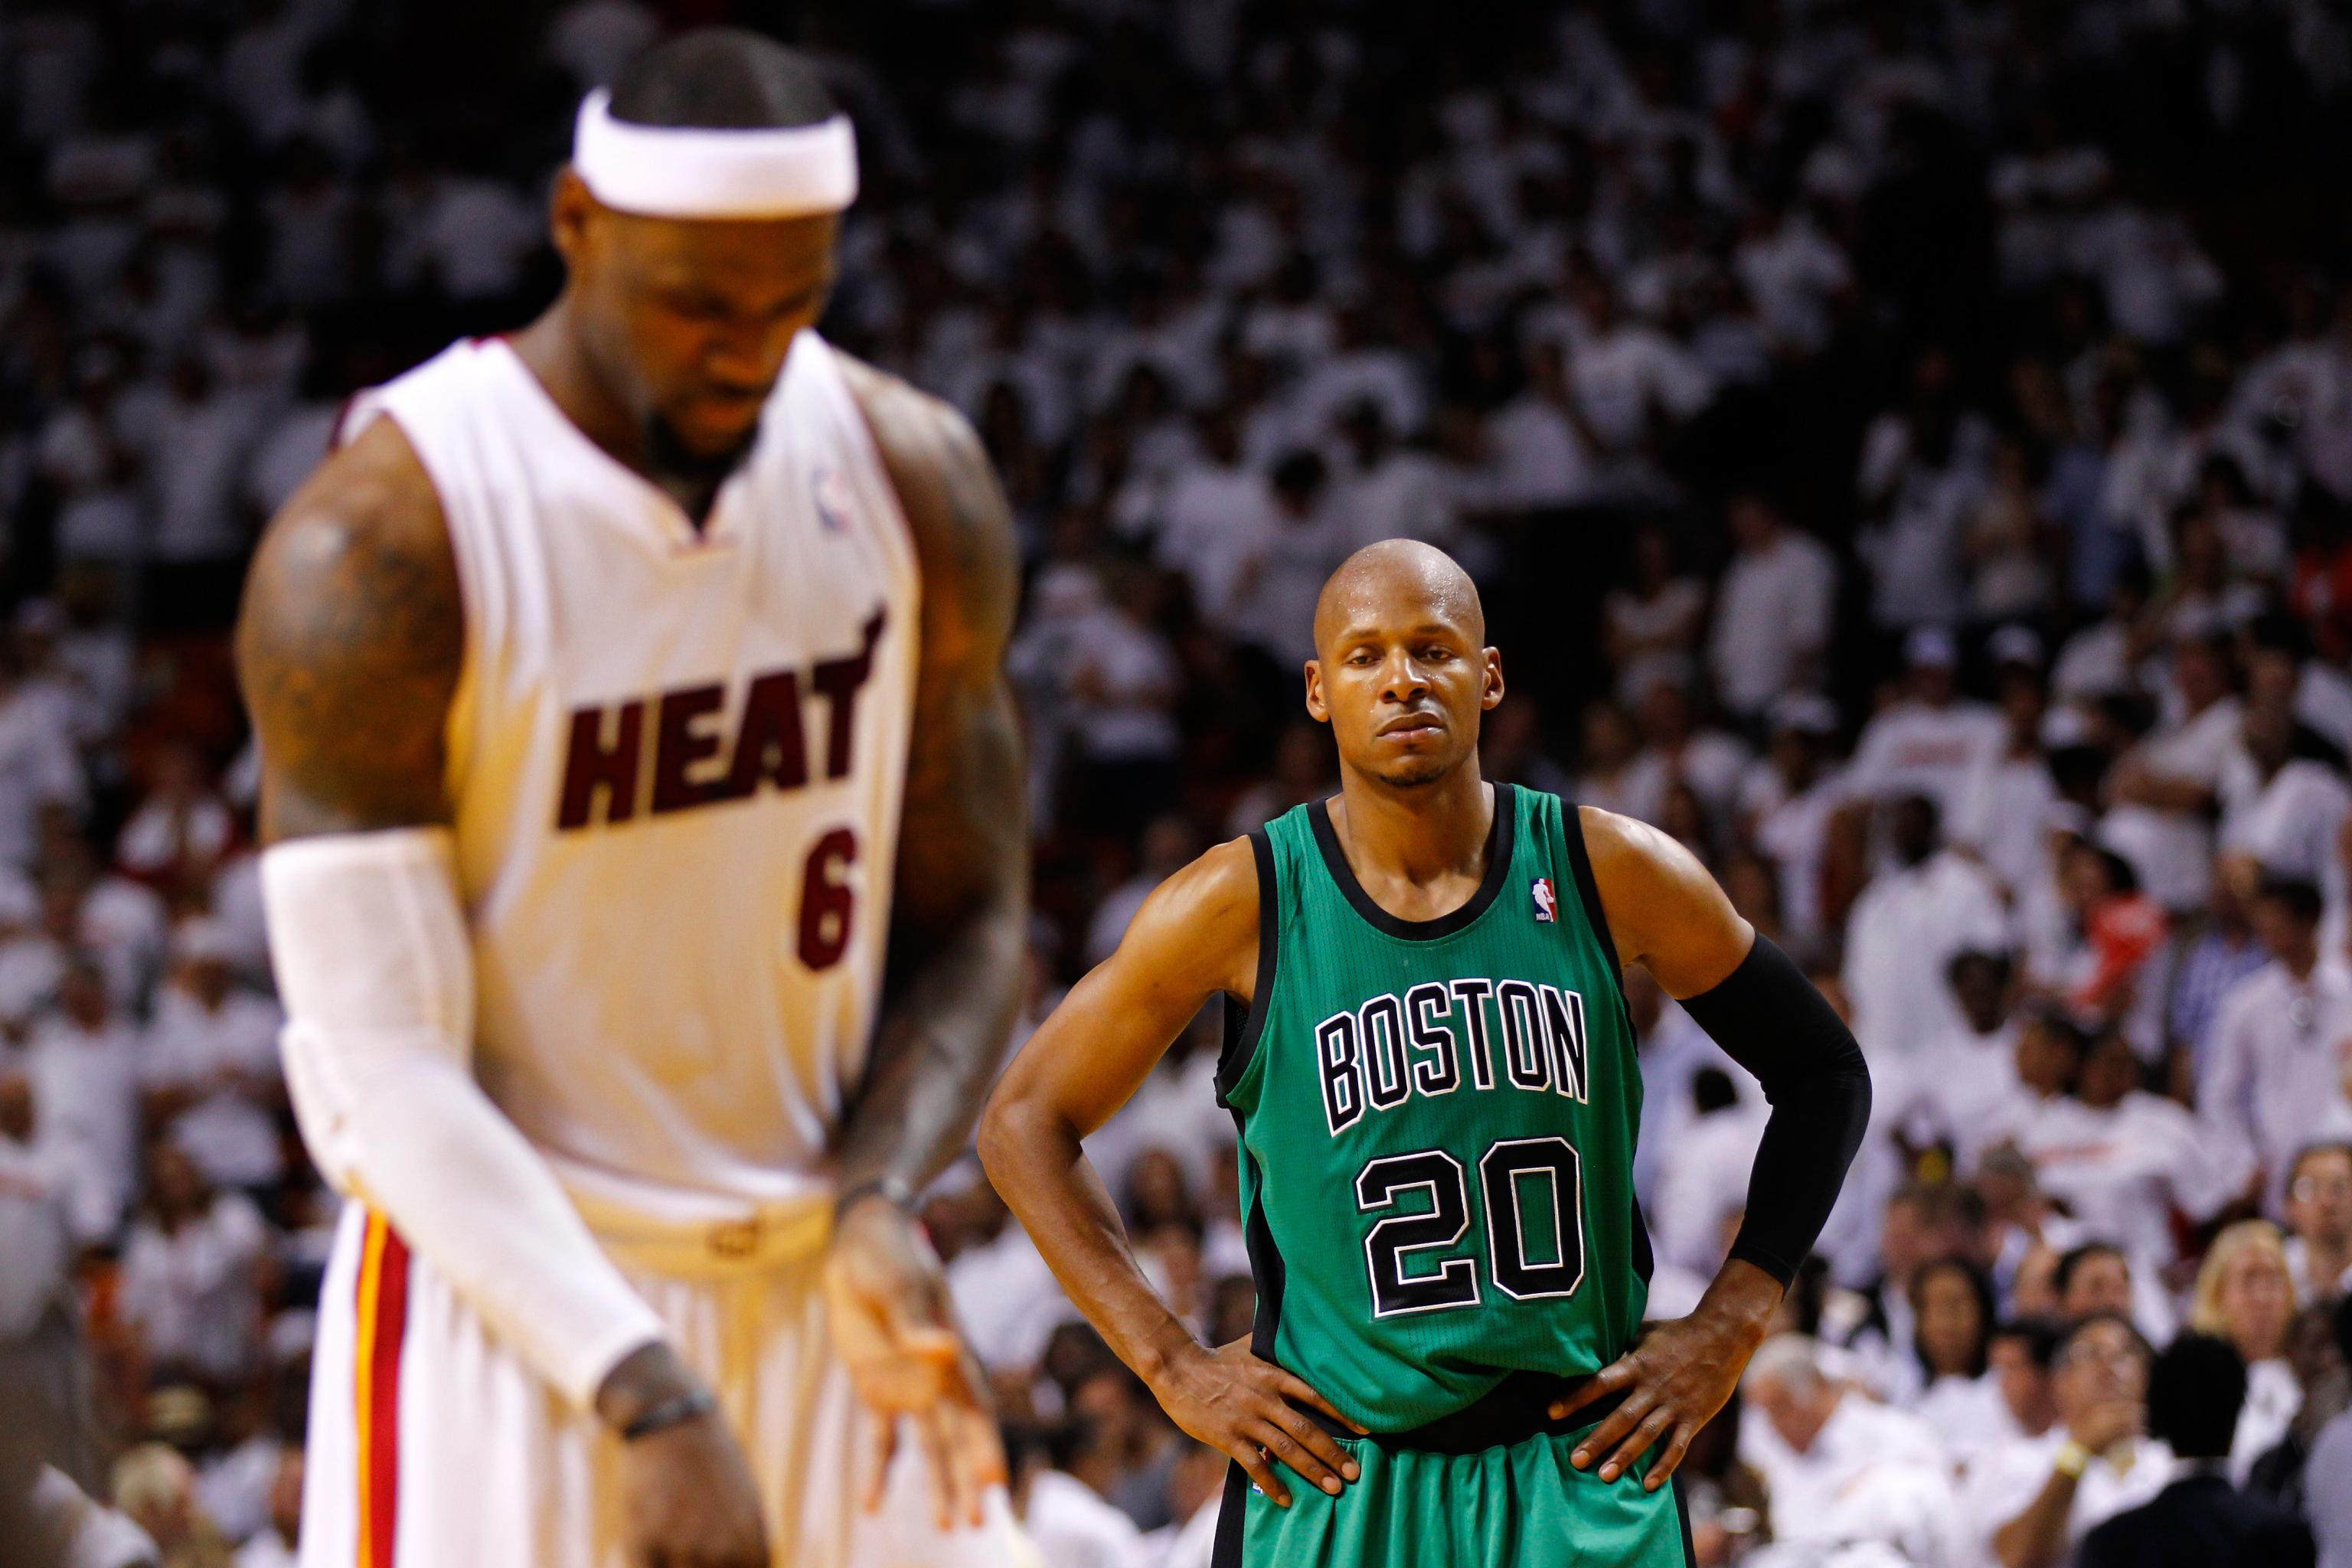 Ray Allen to Miami Heat, leaving Boston Celtics 